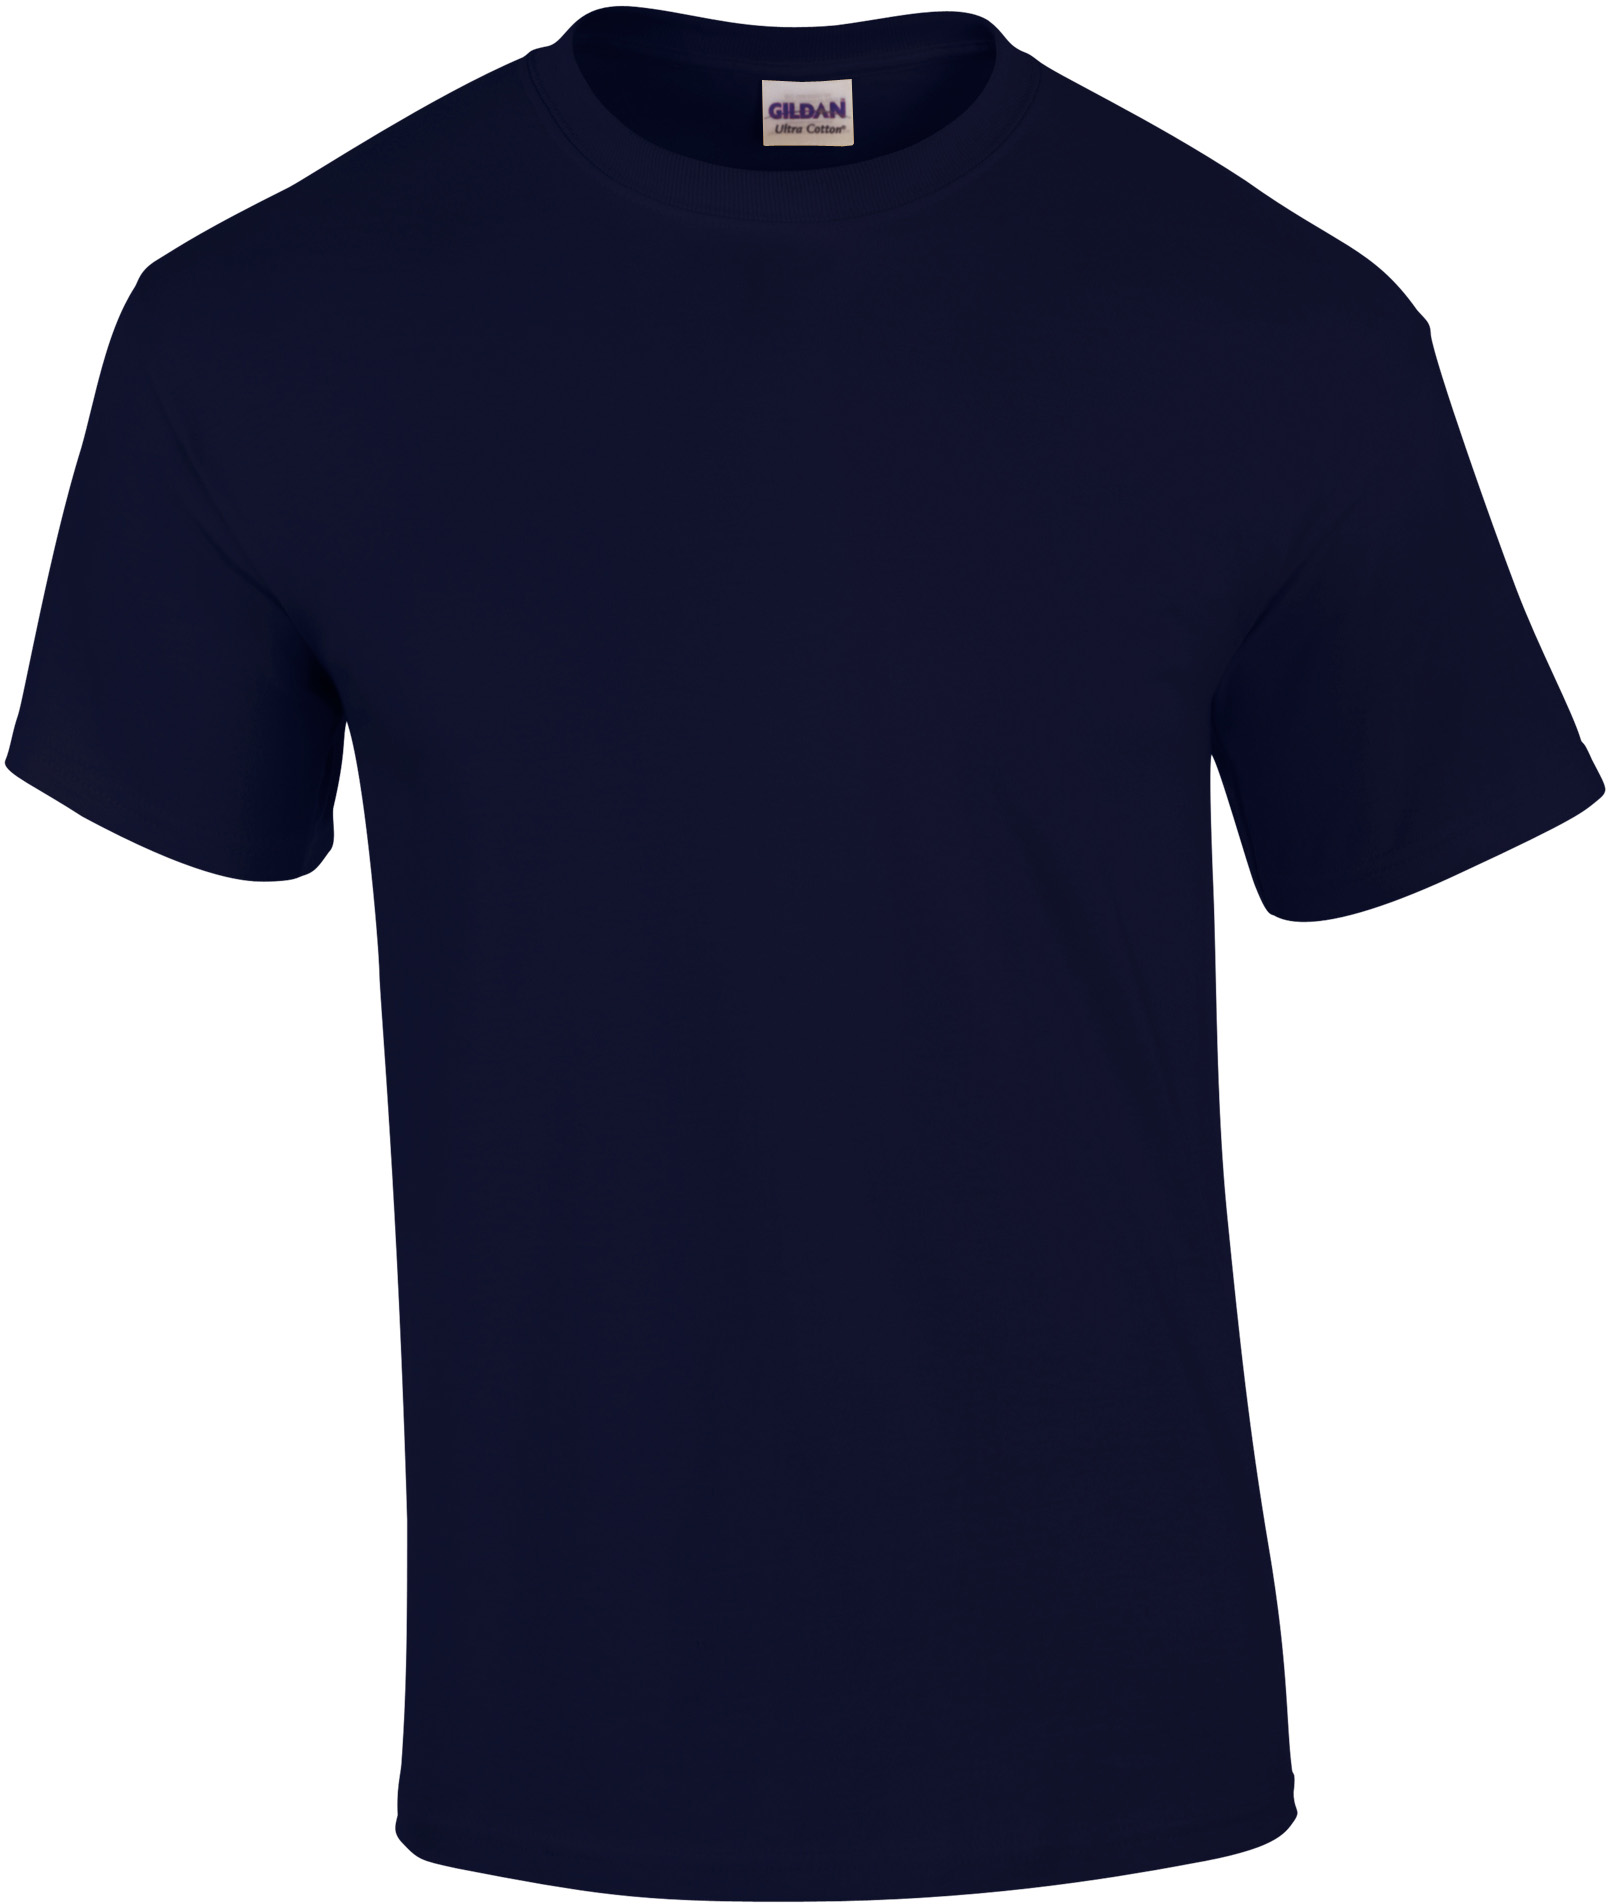 Tričko Gildan Ultra - Námořní modrá 5XL